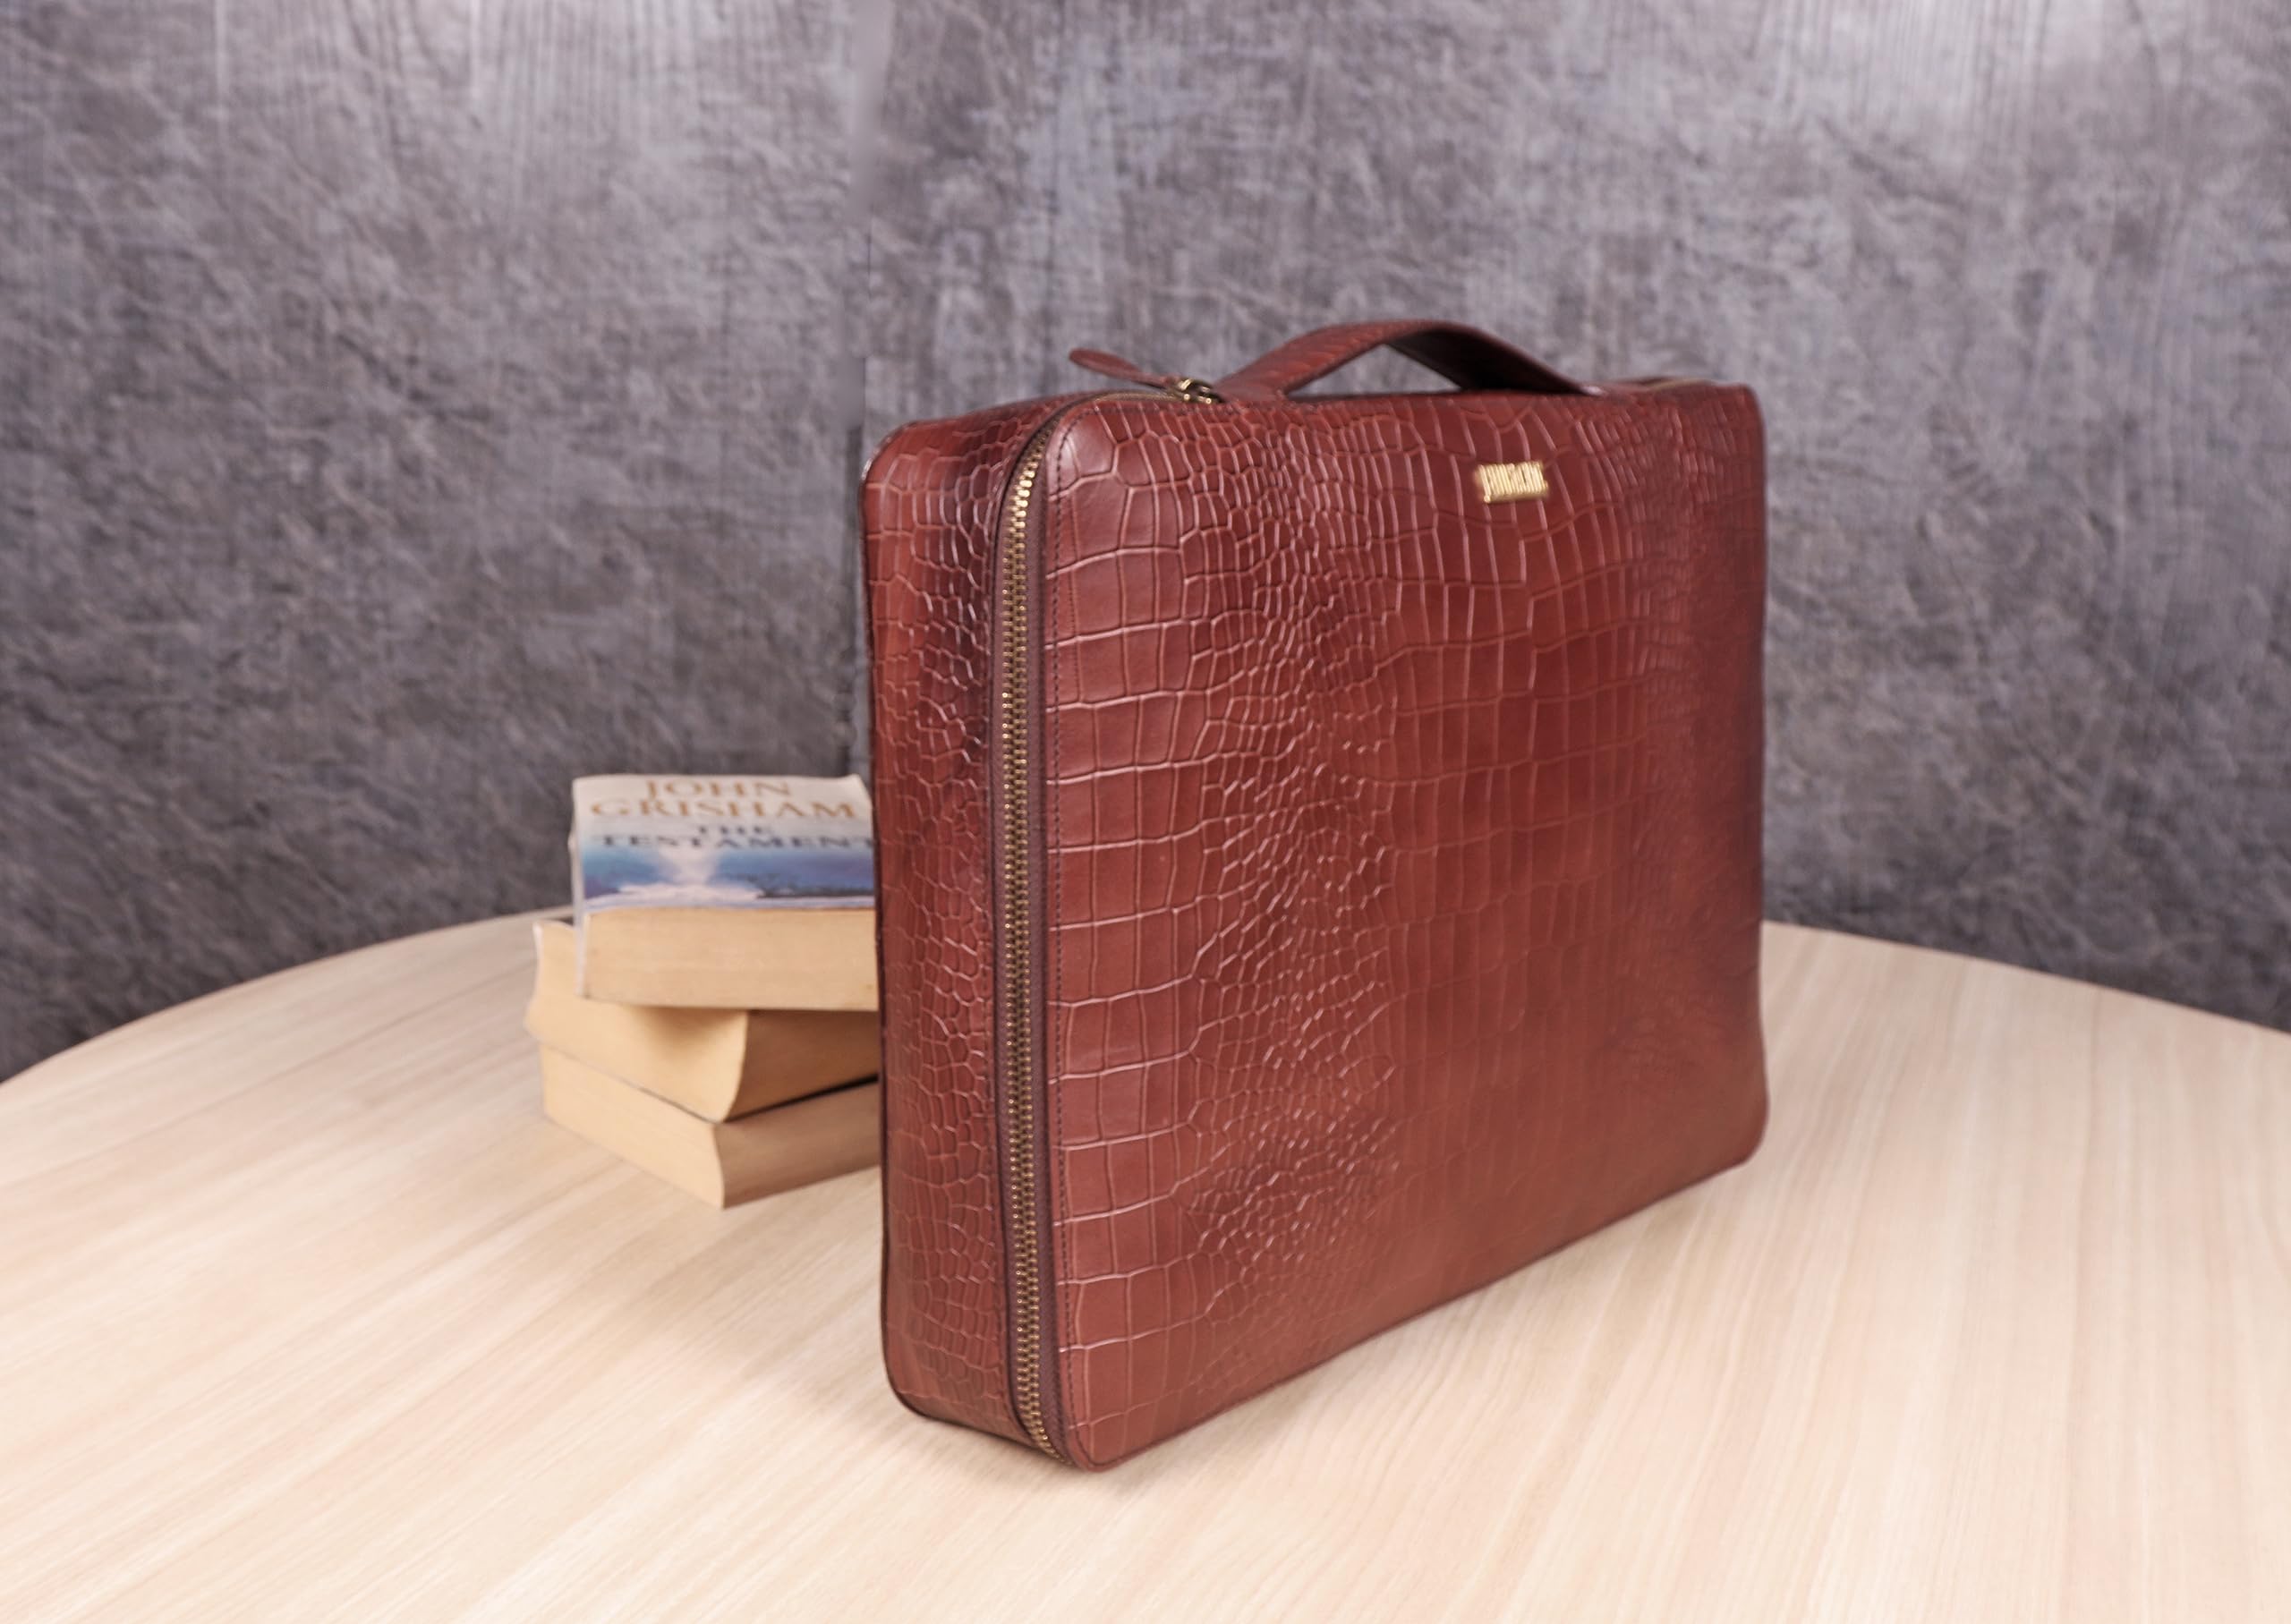 BIDRACHIE Leather Briefcase bag For Office Use, Handbag For Work, Men Leather Business Bag, Croco Textured Briefcase, Laptop Leather Bag, handbag Gift